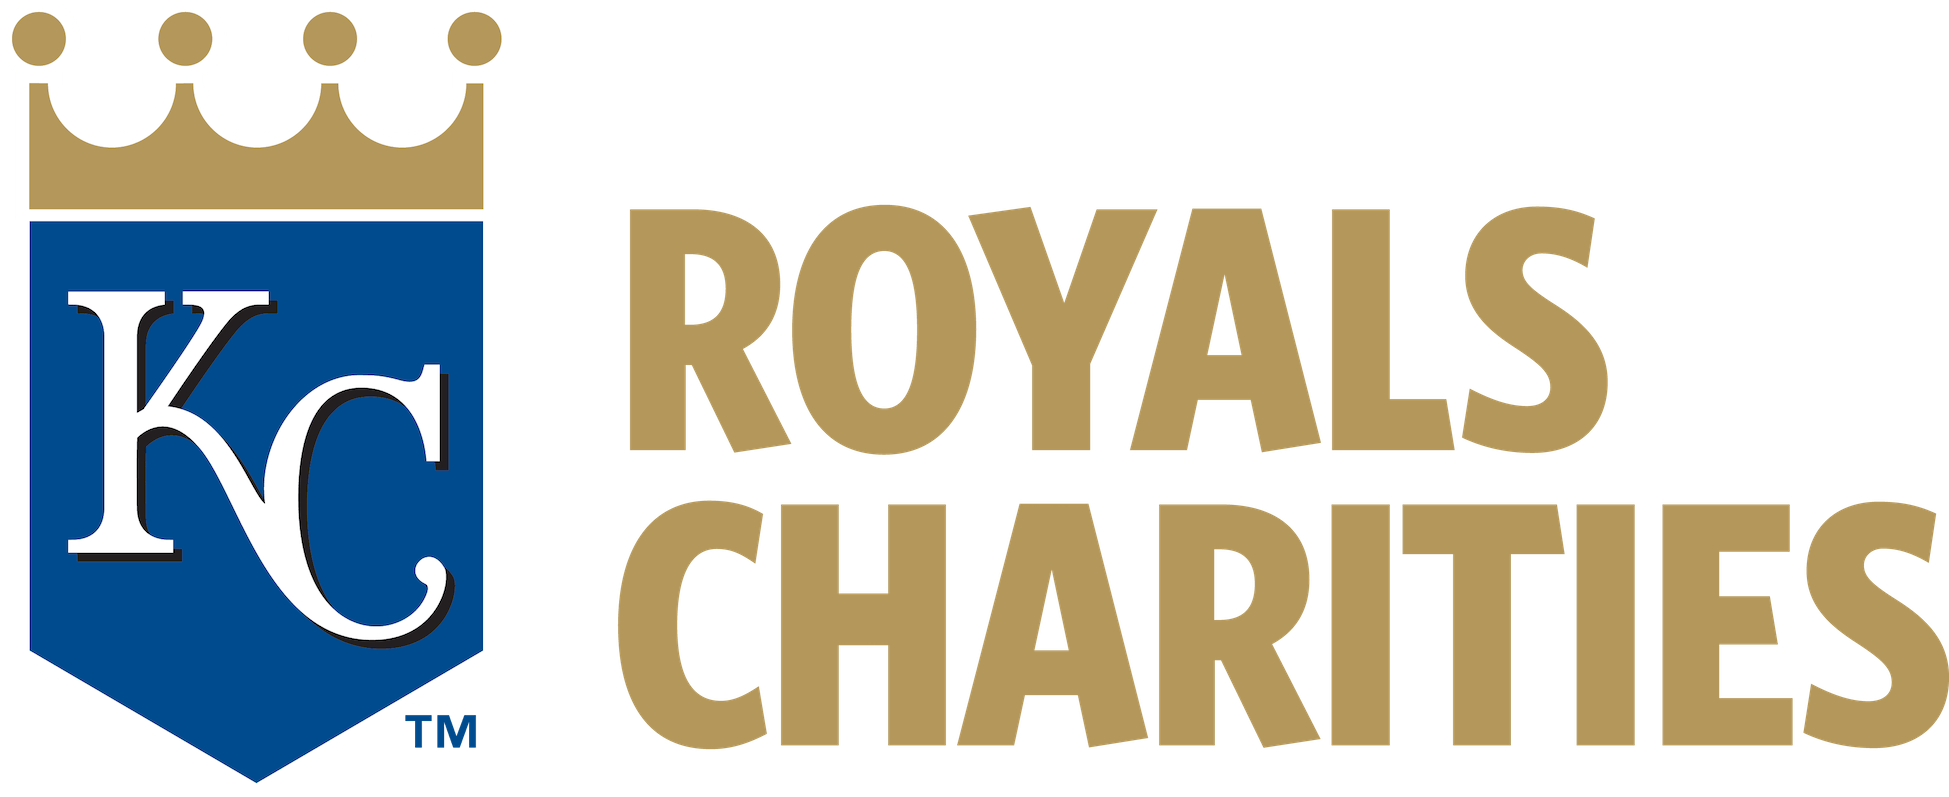 Transparent Royals Logo - Kansas city royals crown logo graphic royalty free stock - RR ...